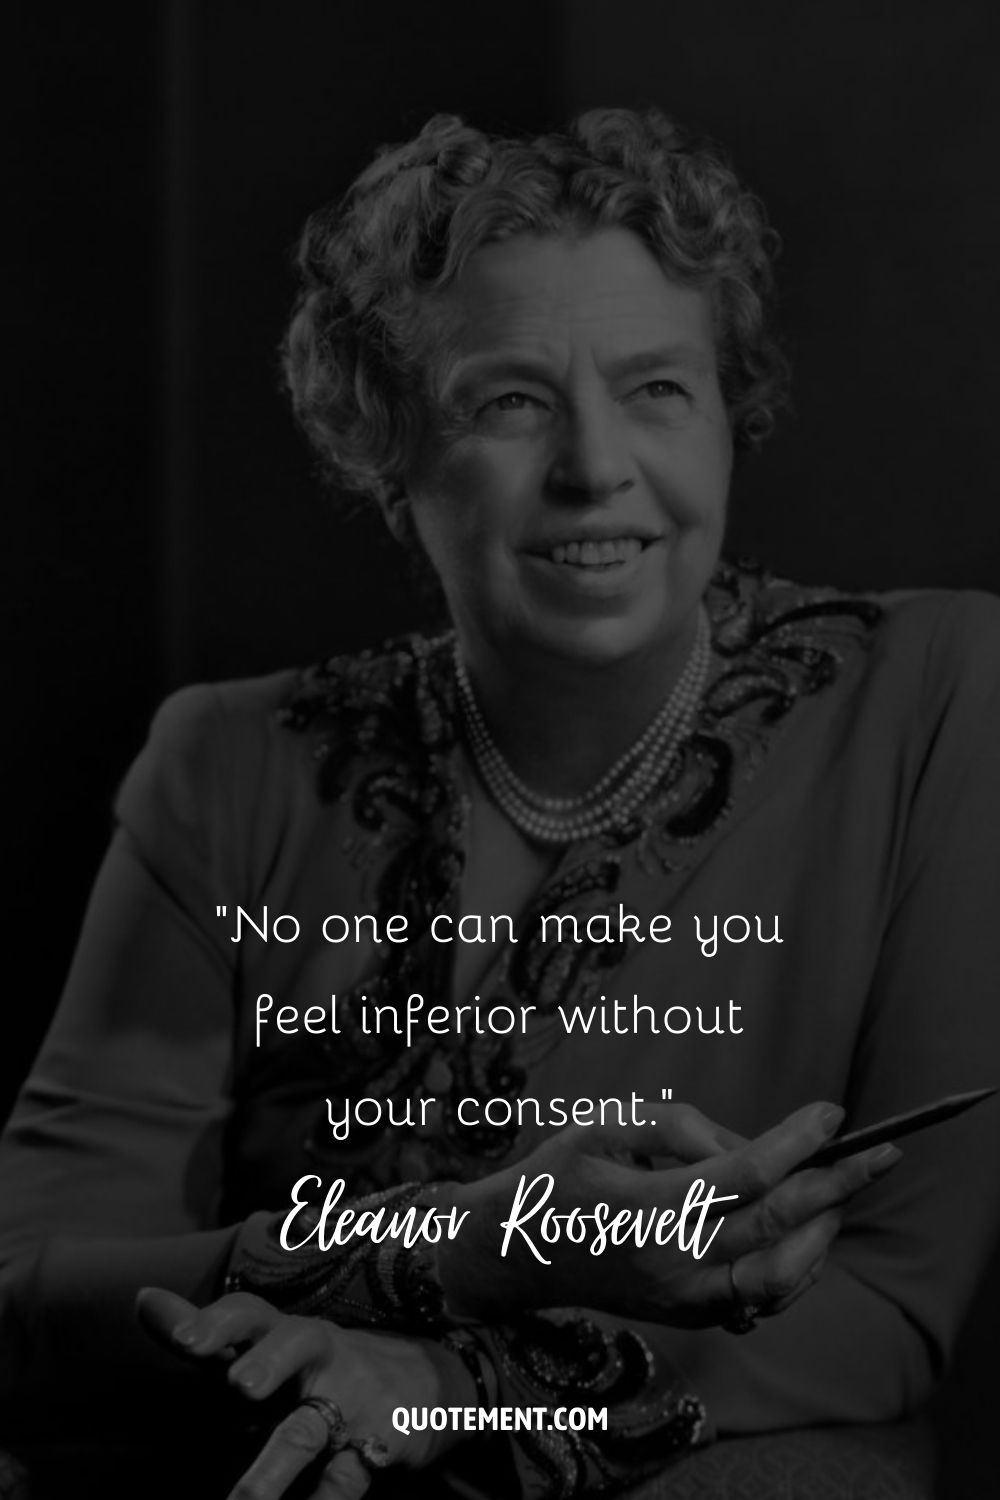 Imagen de Eleanor Roosevelt representando la mejor cita de Eleanor Roosevelt.